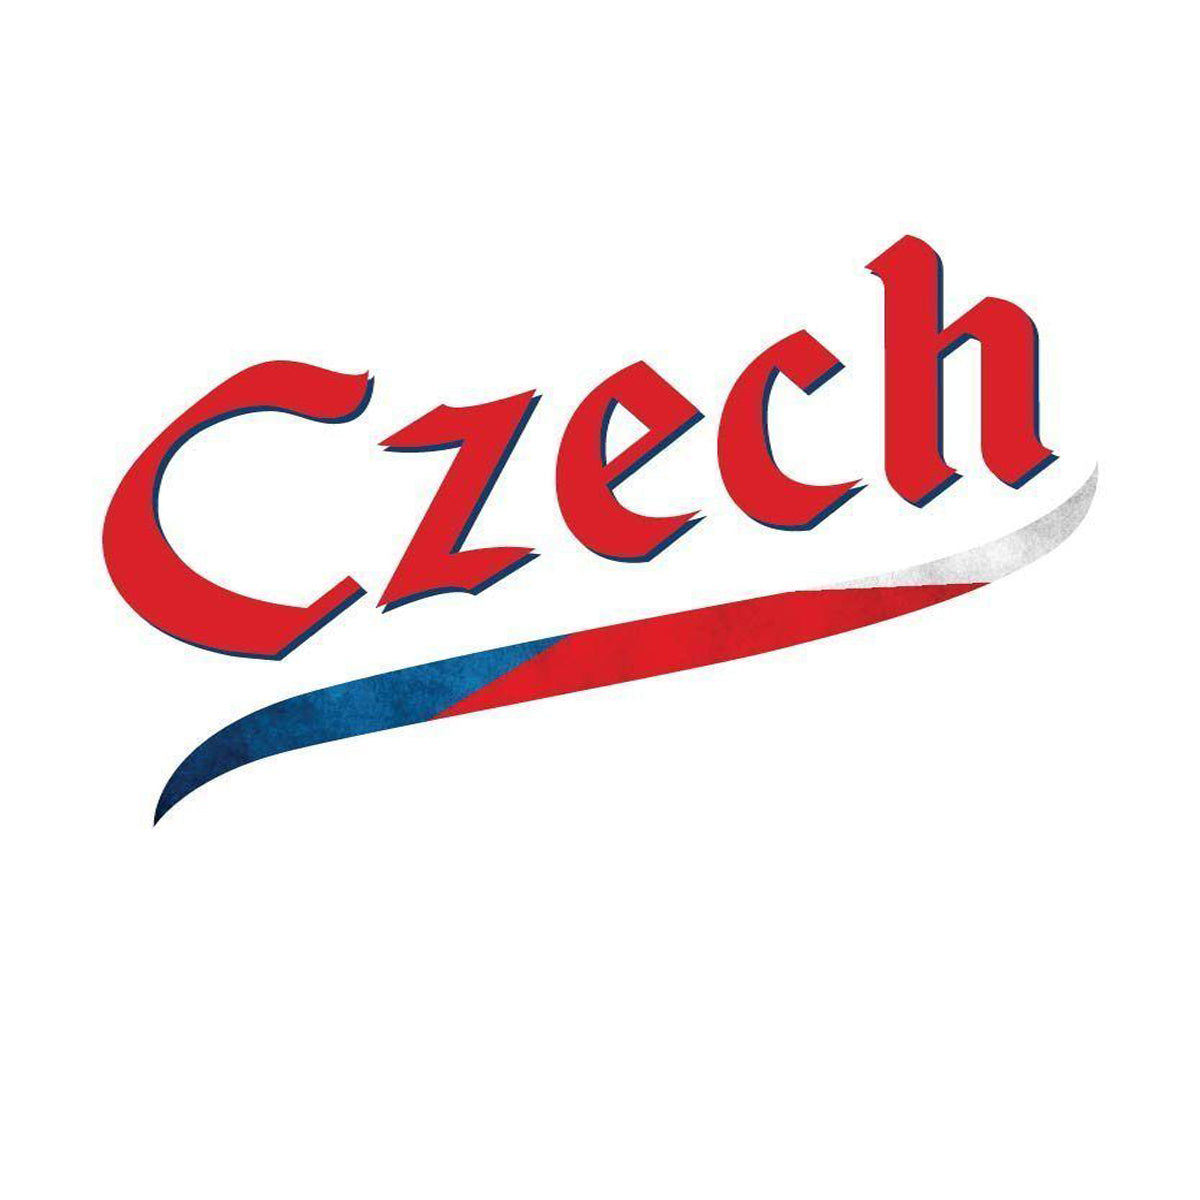 Czech Republic Script World Cup 2022 Printed Tee T-shirts 411 